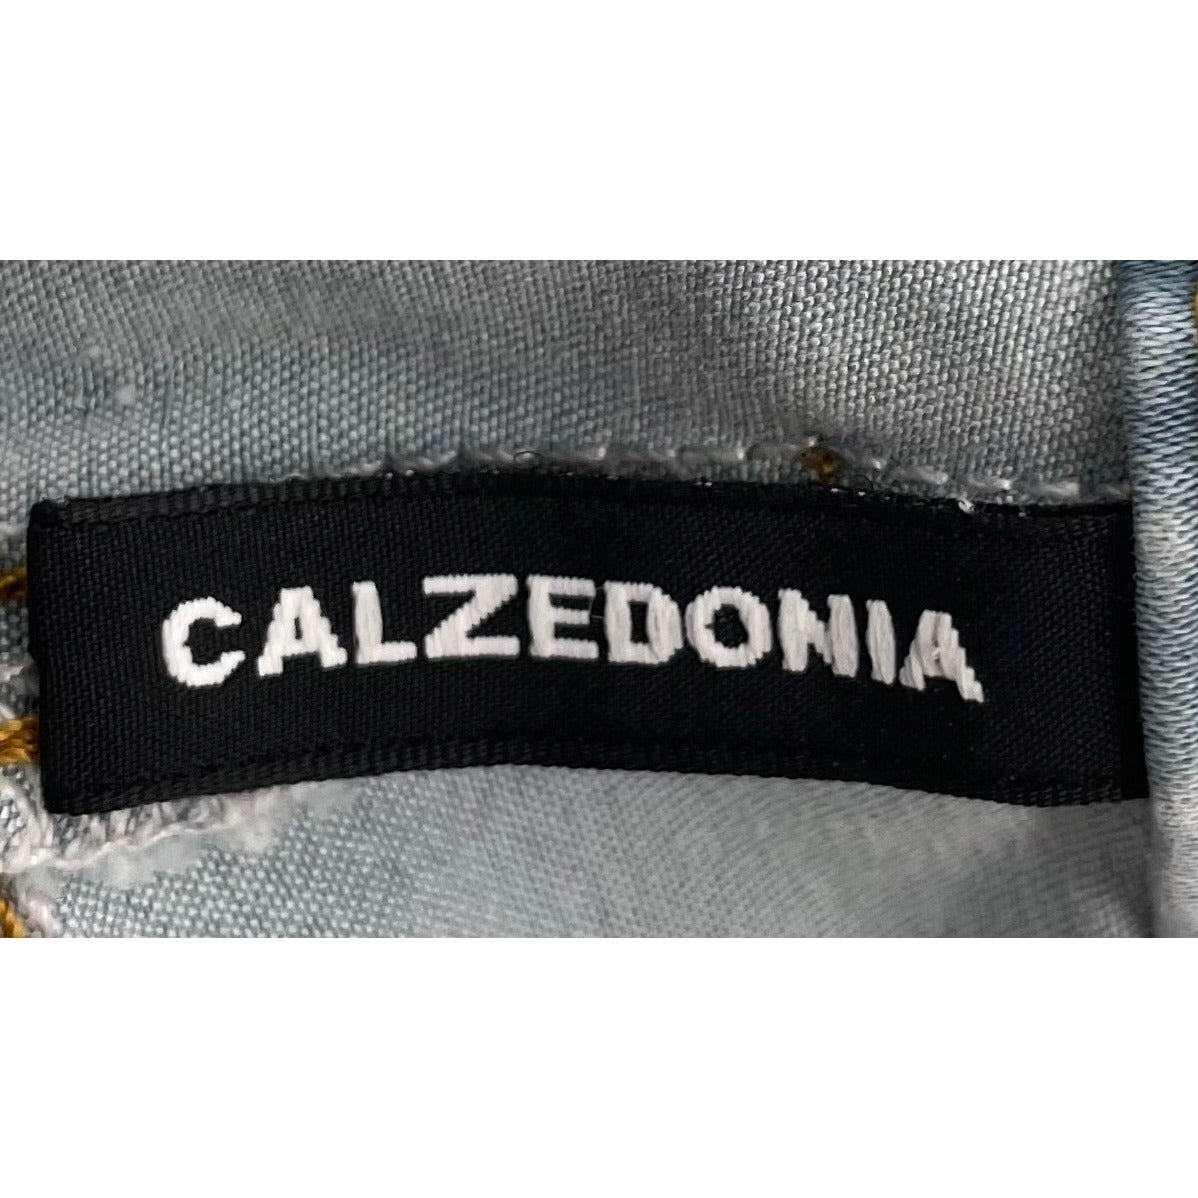 Calzedonia Women's Size Large Light Blue Denim Skinny Jean Stretch Pants